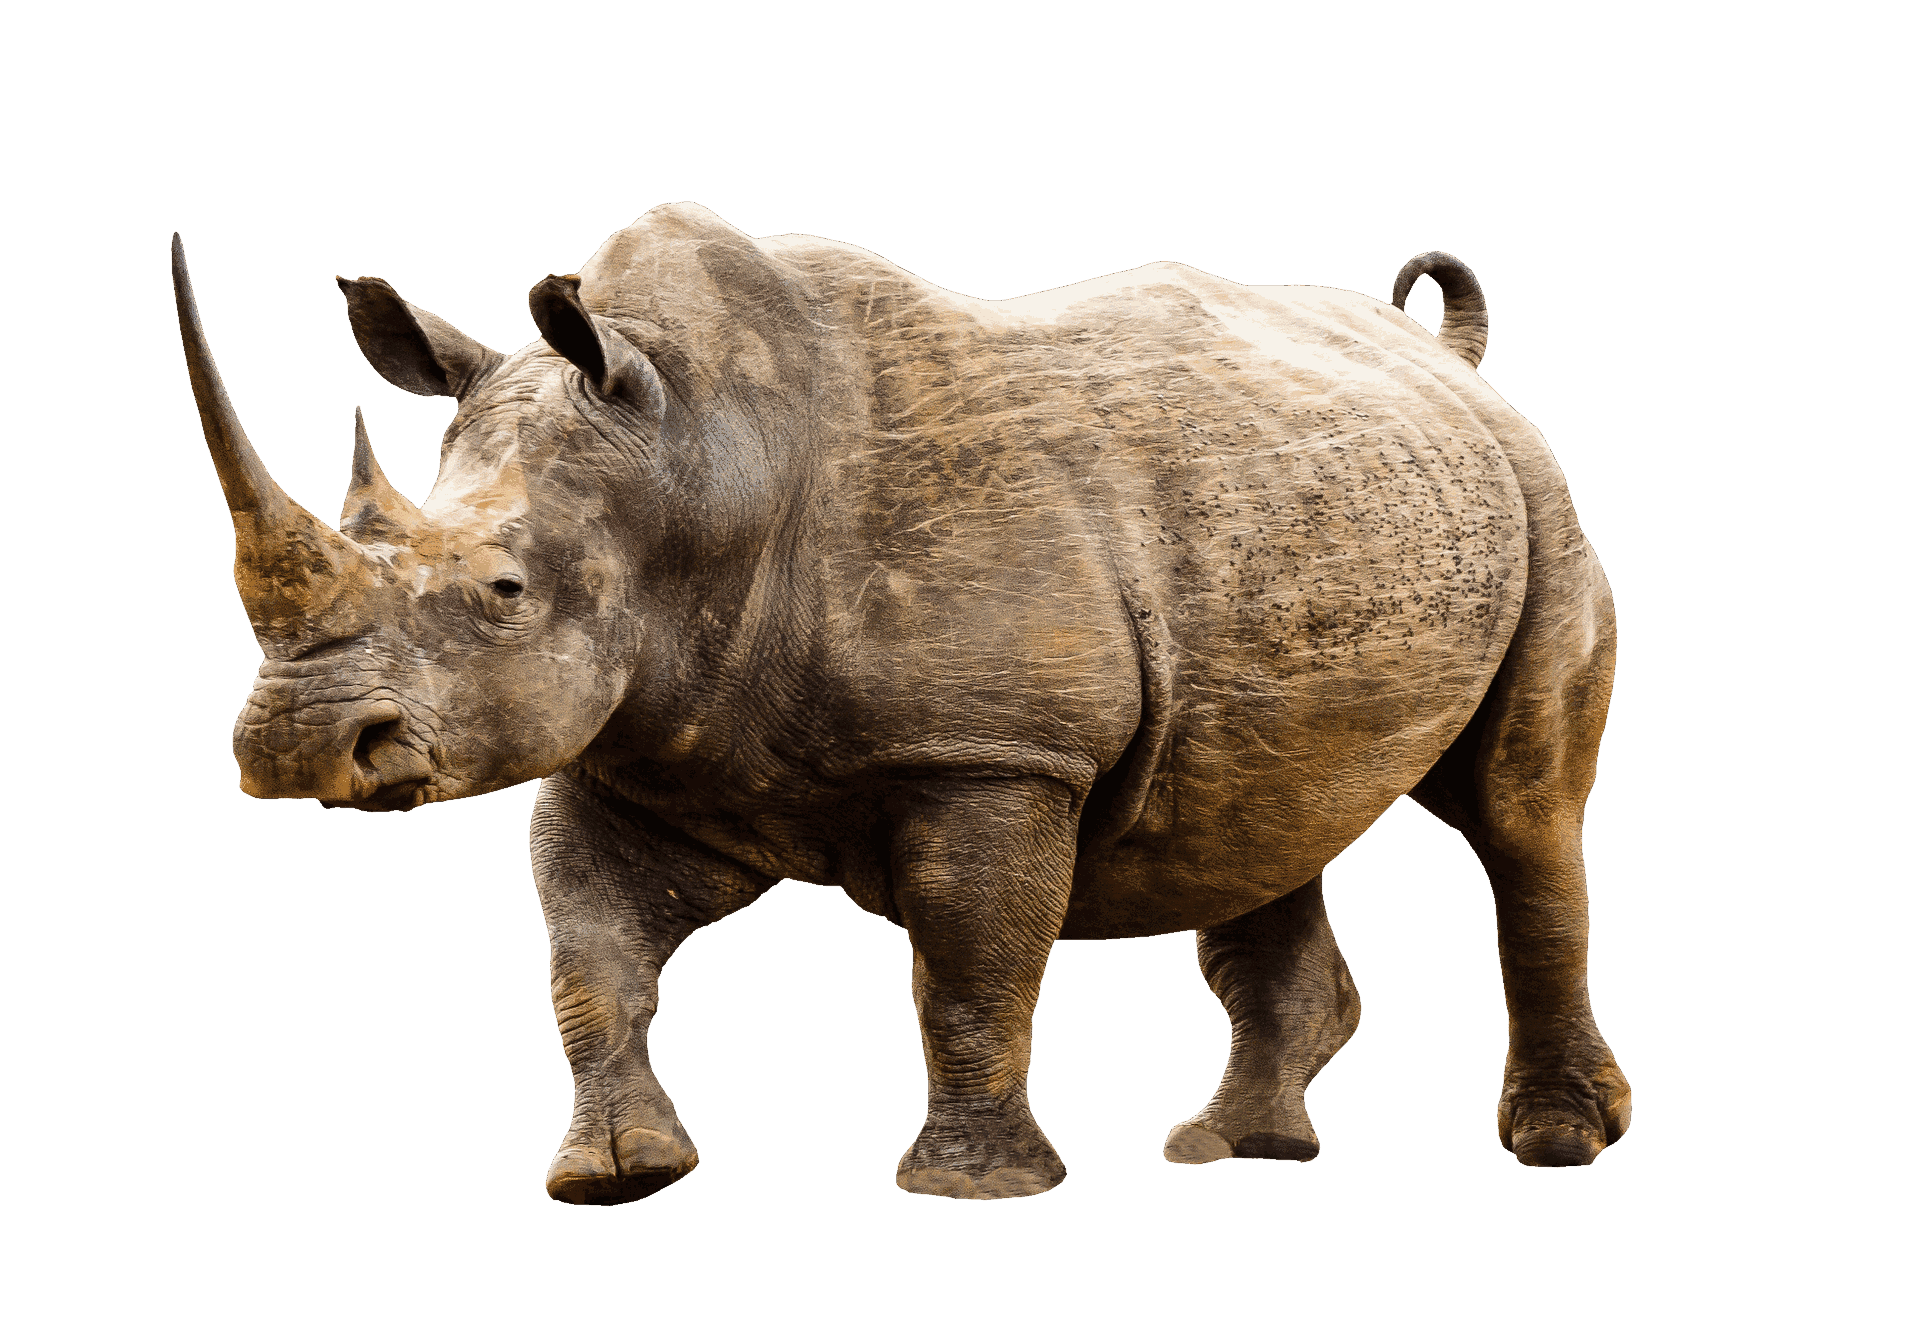 Rhinocerus-isolated-photo